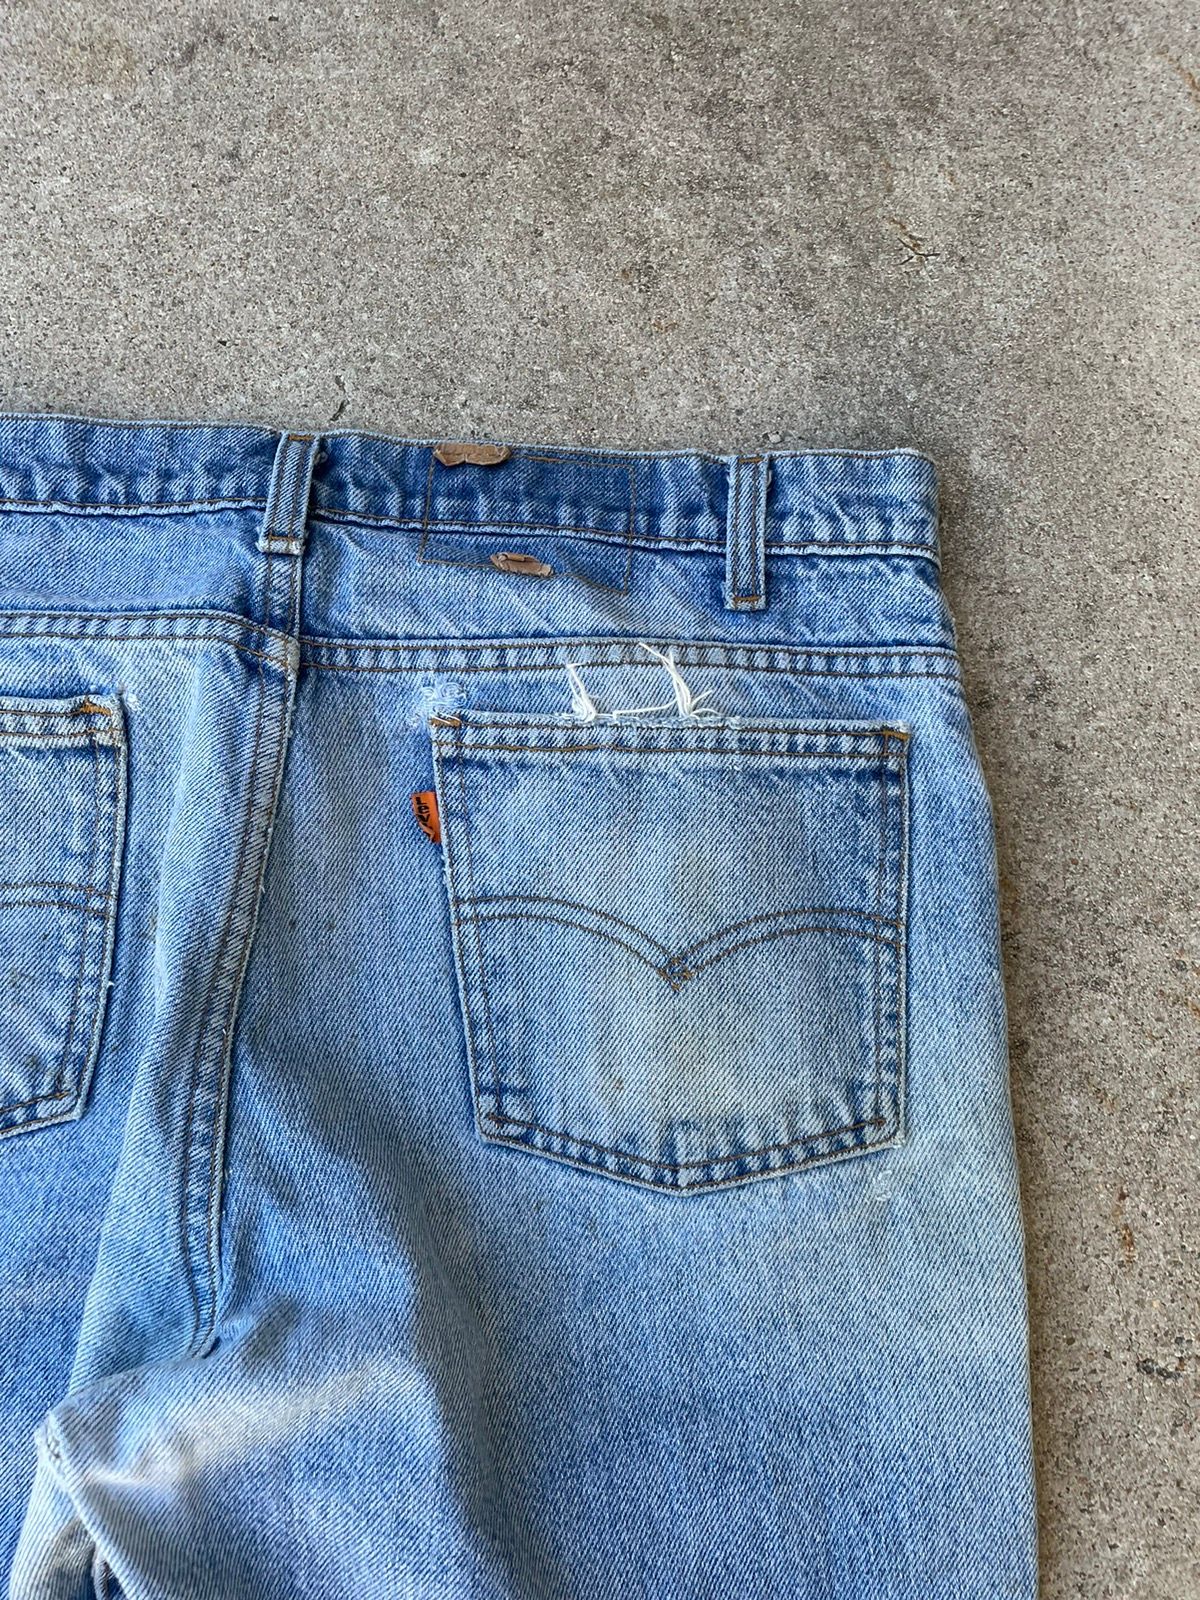 Vintage Vtg 80s Levis 517 Orange Tab Bootcut Distressed Jeans 34x31 Size US 32 / EU 48 - 8 Thumbnail